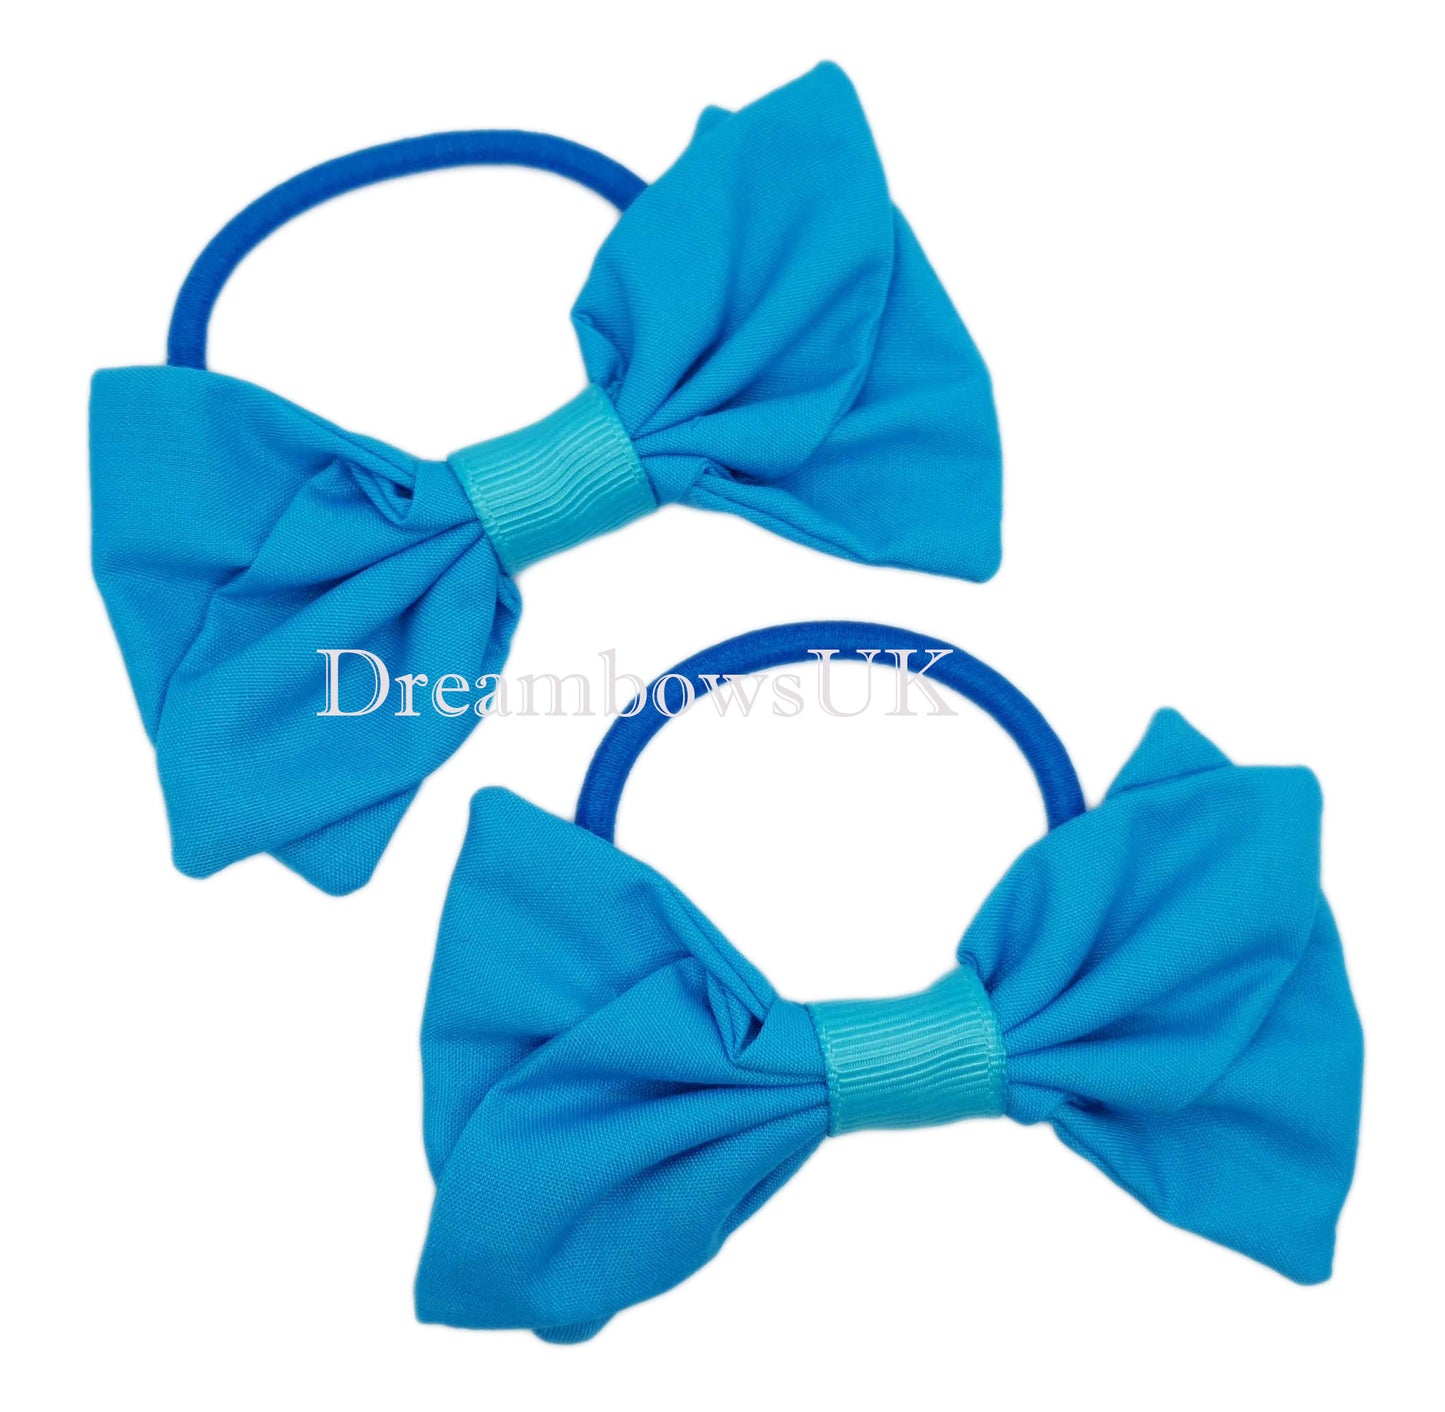 Girls turquoise fabric hair bows on thick hair elastics